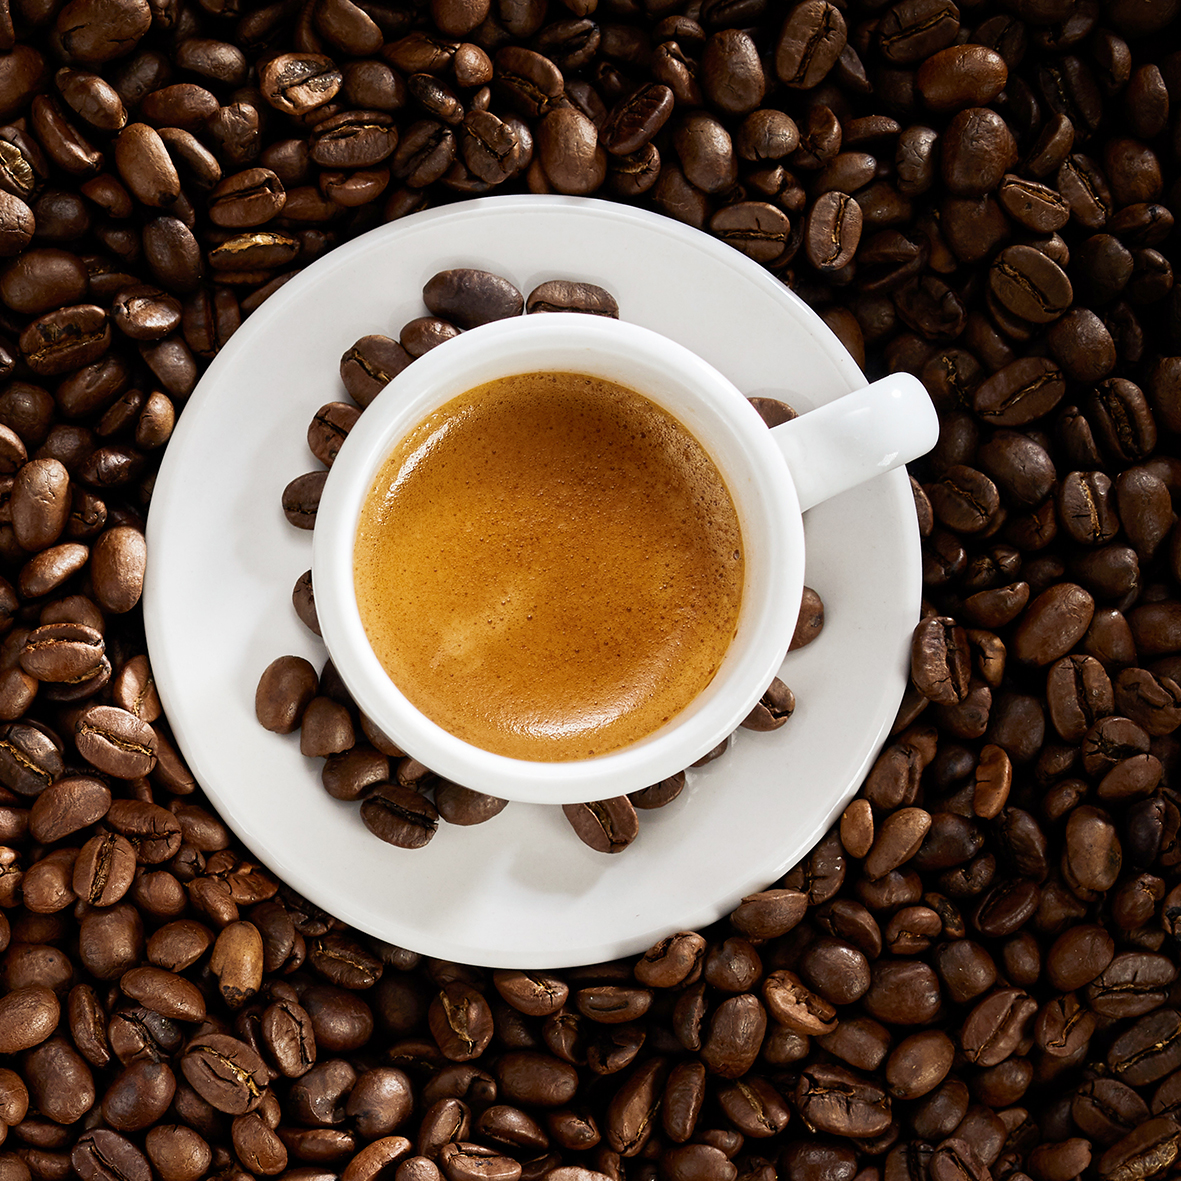 Espresso ground coffee